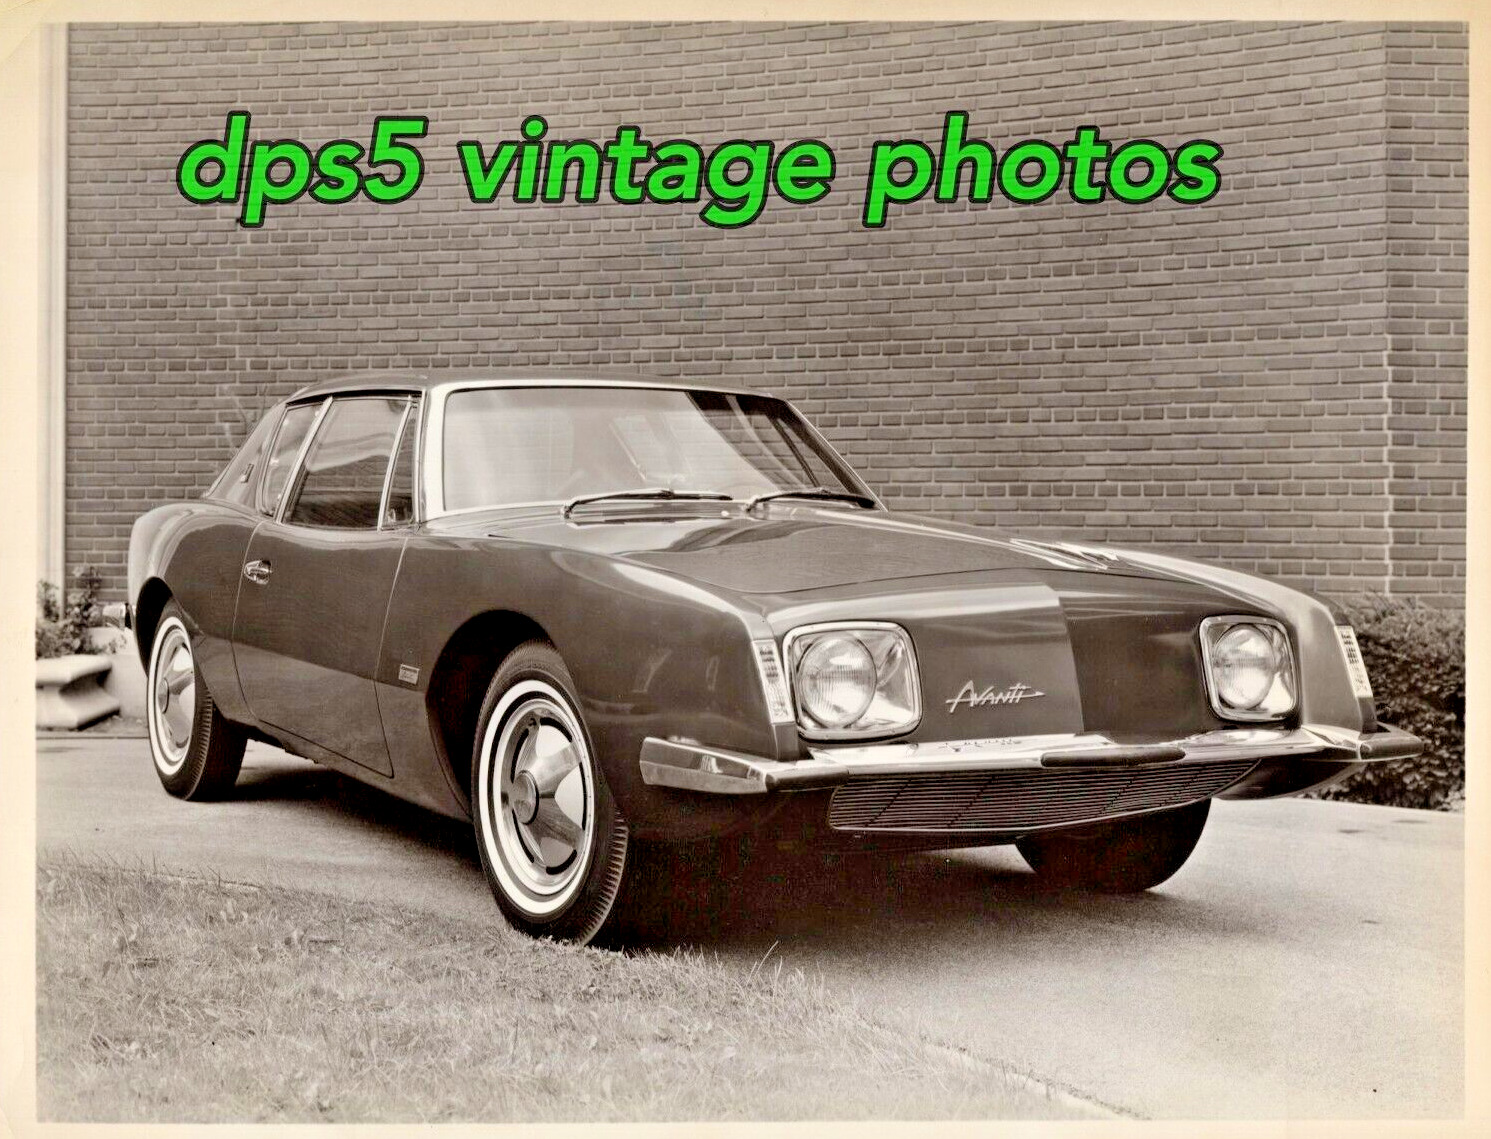 1964 Press Photo Avanti Auto-- Vintage  8x10 B&W Print